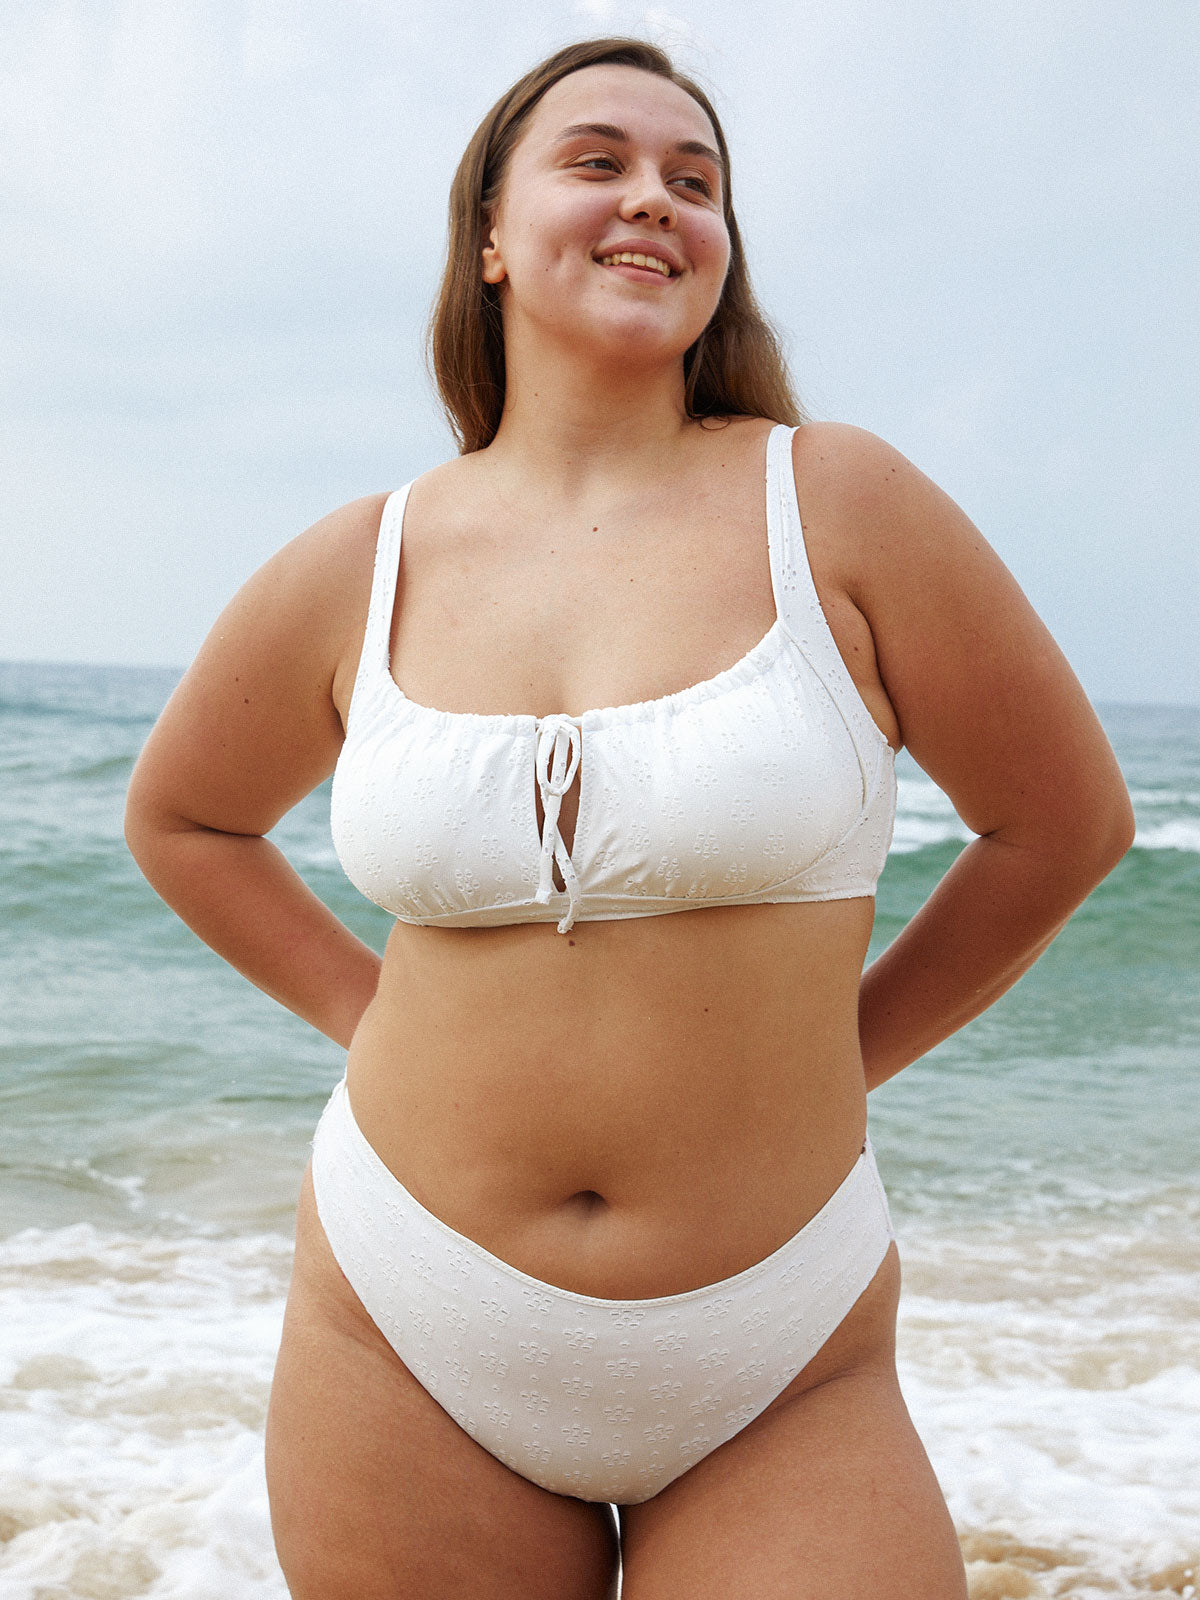 Plus Size Bikini Images – Browse 9,831 Stock Photos, Vectors, and